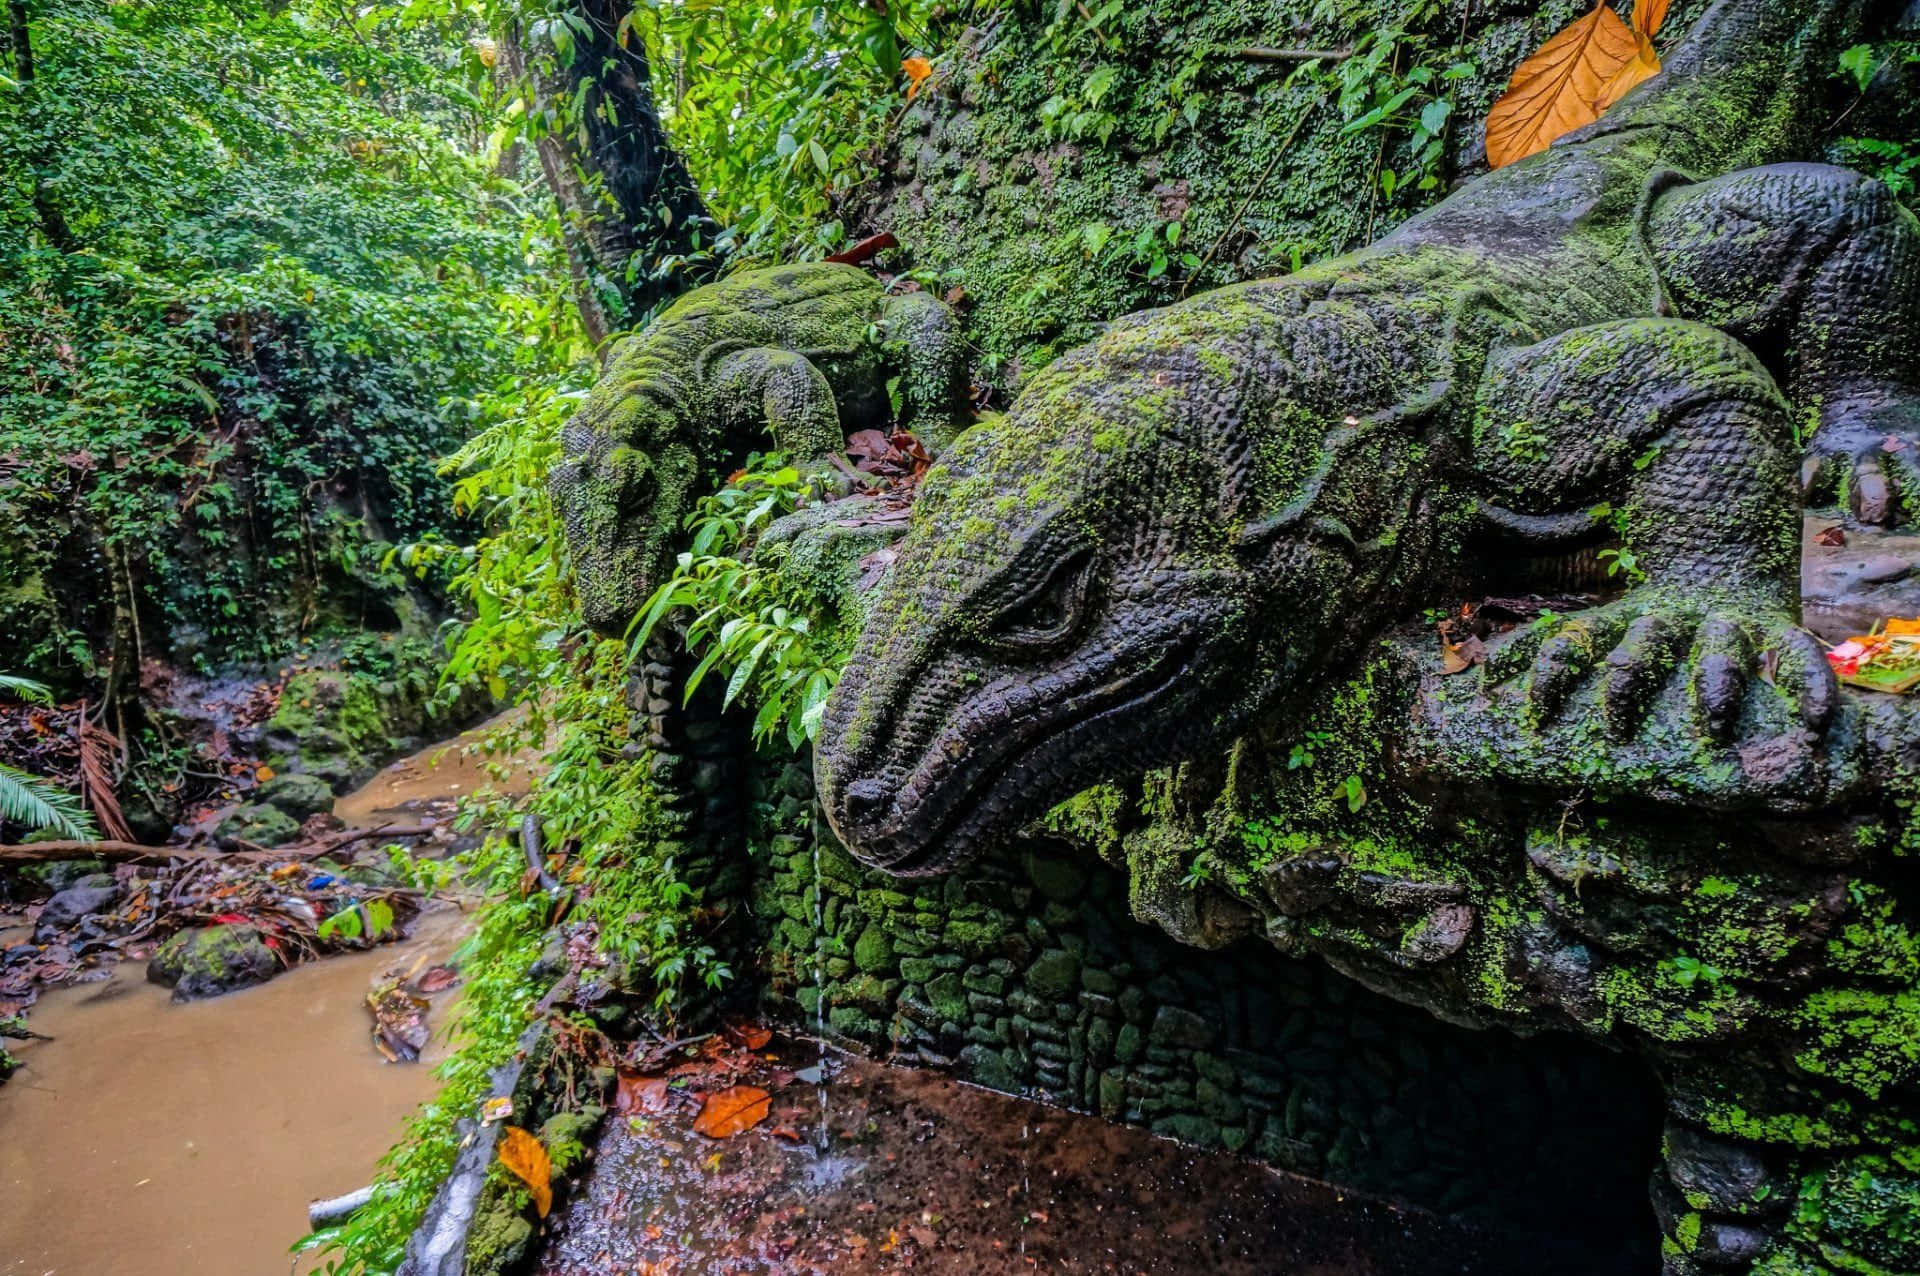 A Statue Of An Iguana In The Jungle